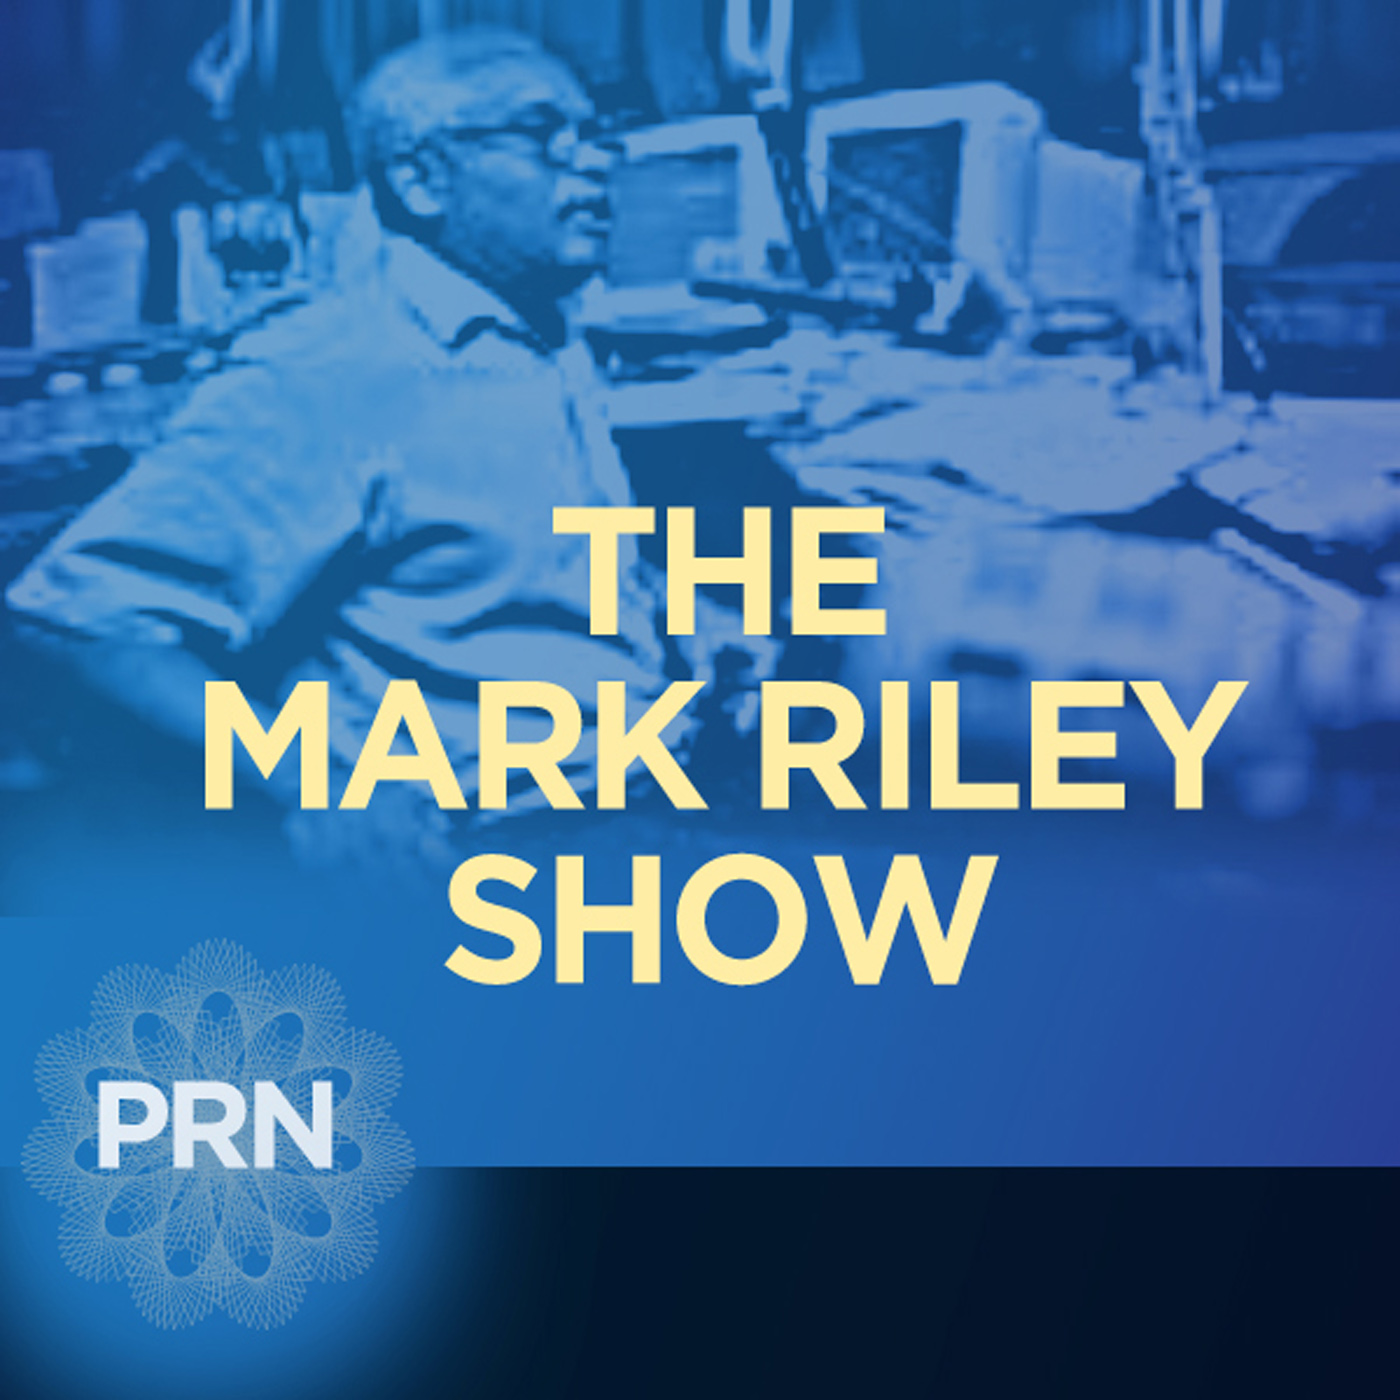 The Mark Riley Show